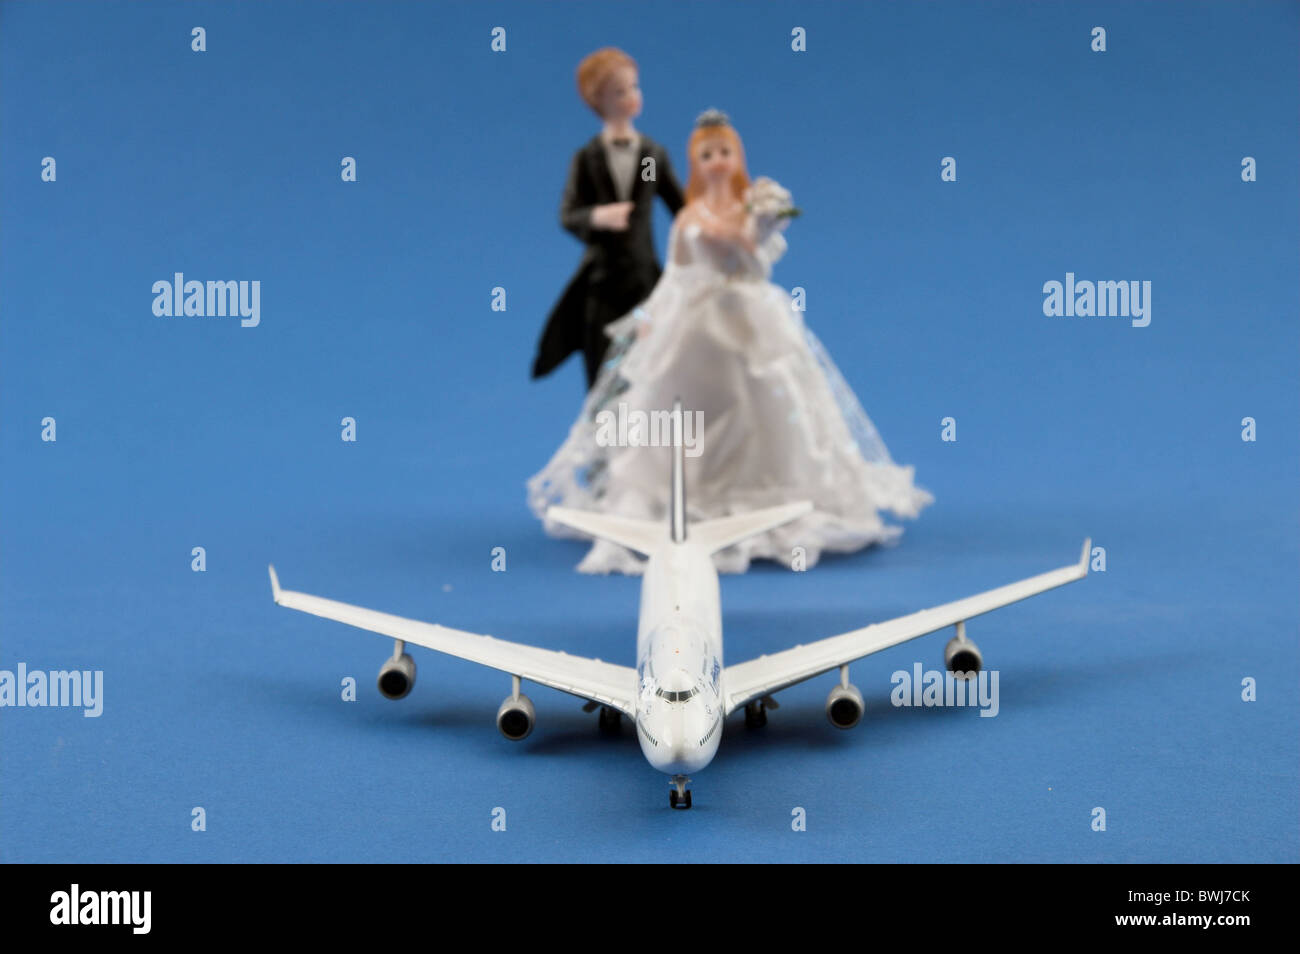 marriage figures symbol honeymoon airplane aviation airman plane traveling world trip holidays vacation mar Stock Photo